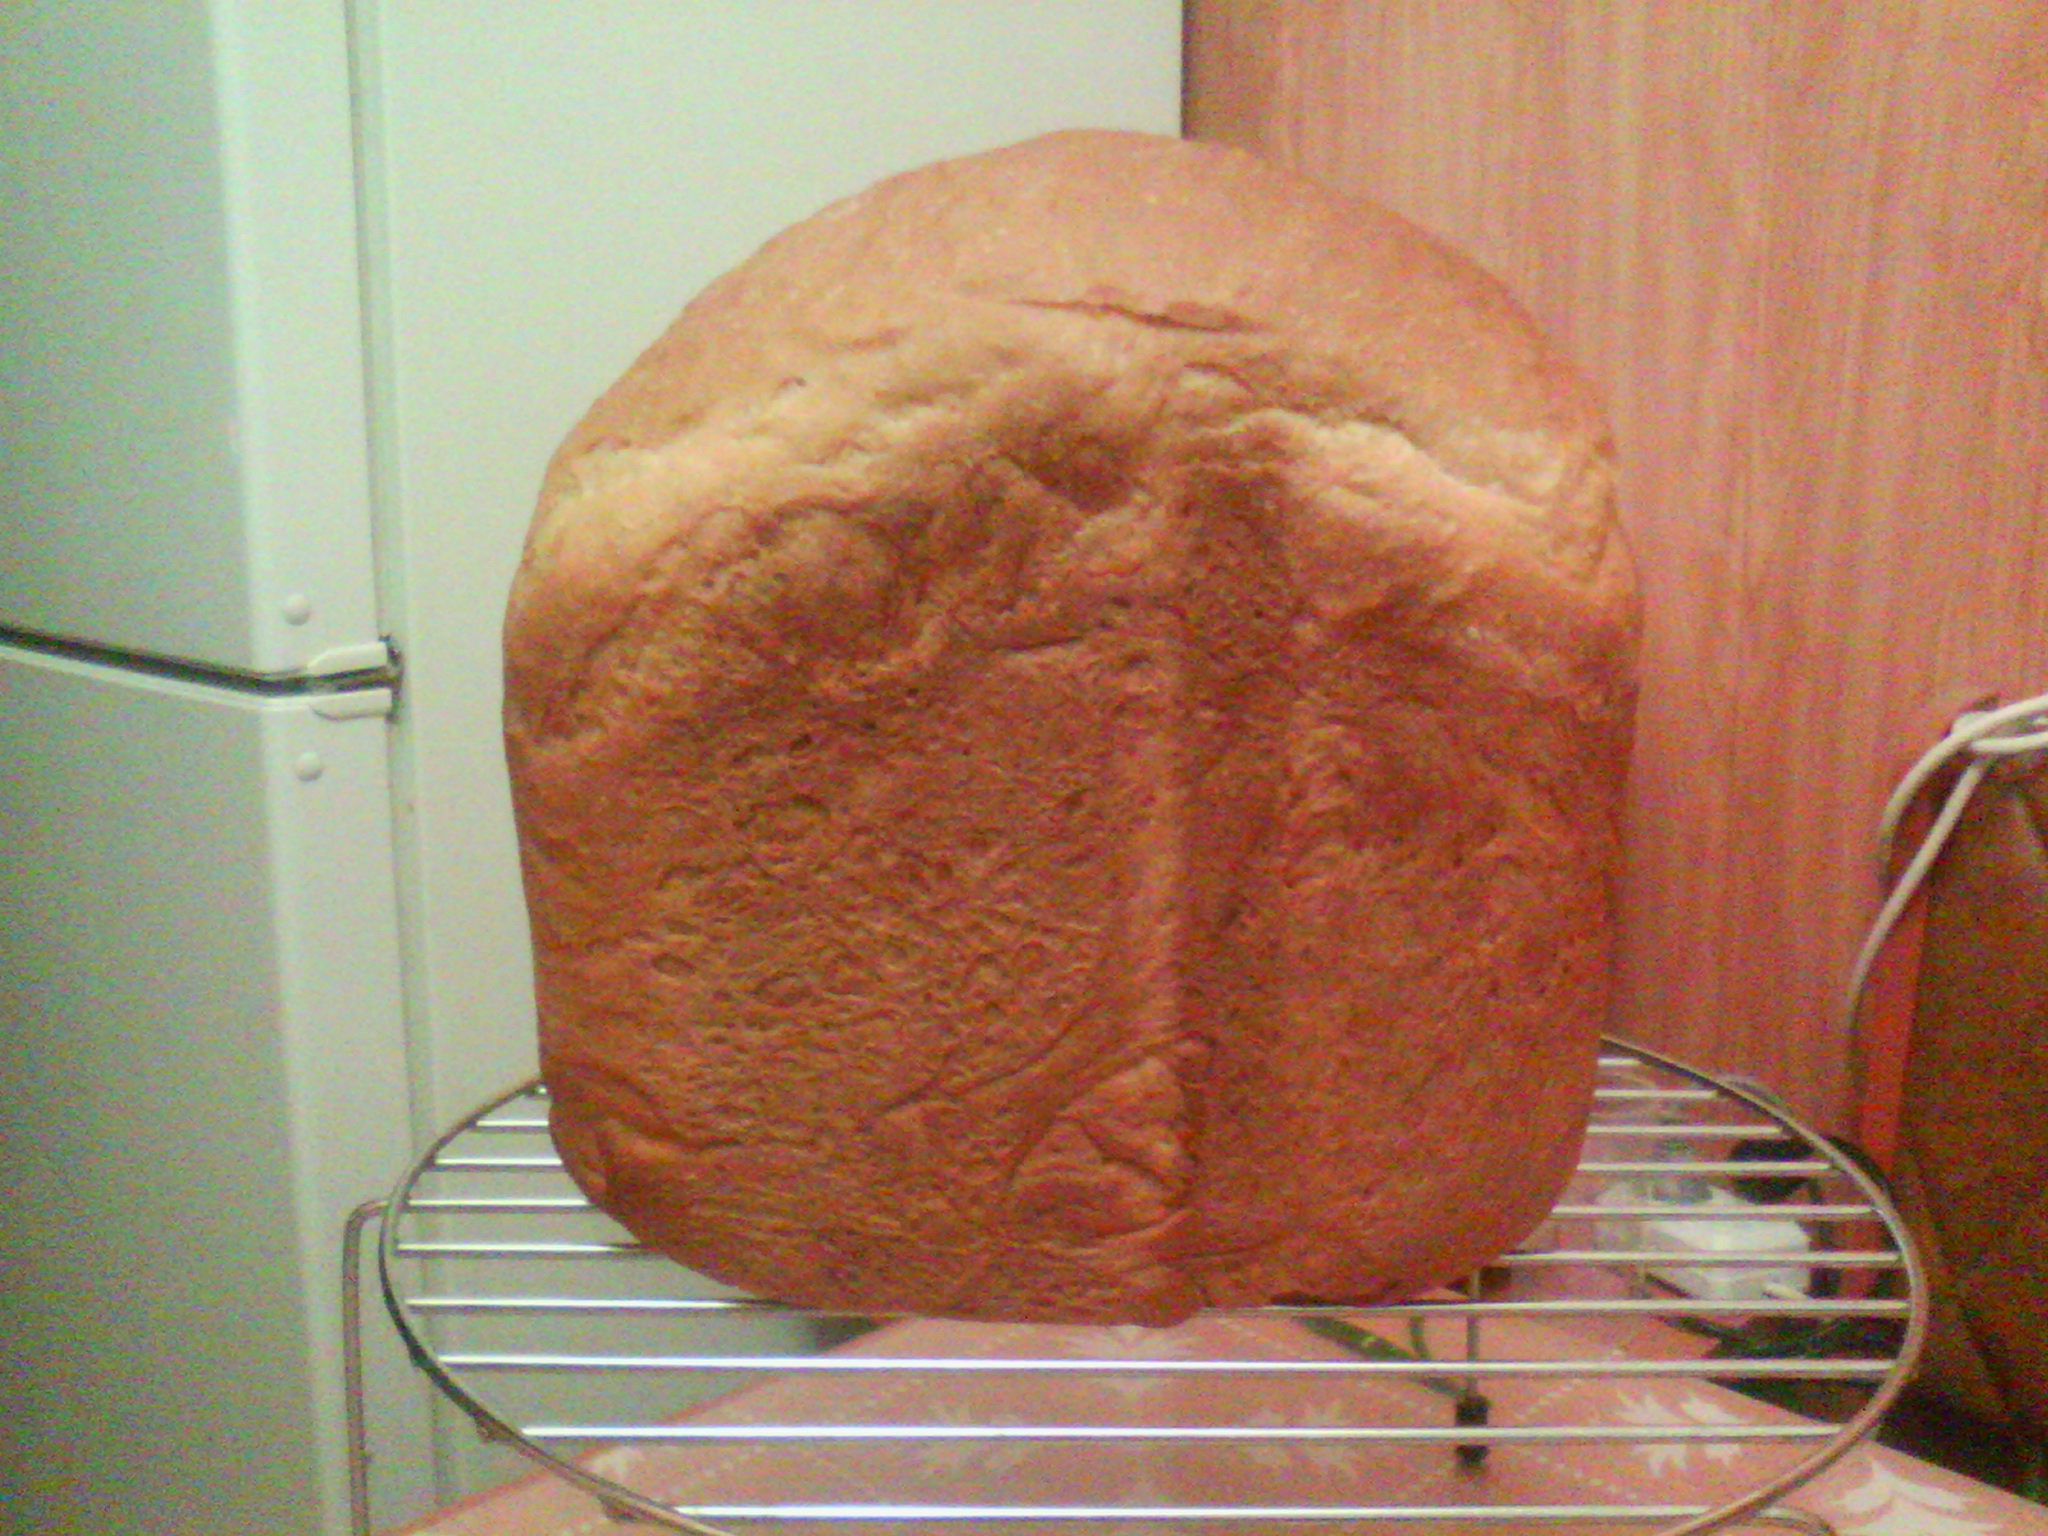 Butter bread made of 1 grade flour in a bread machine